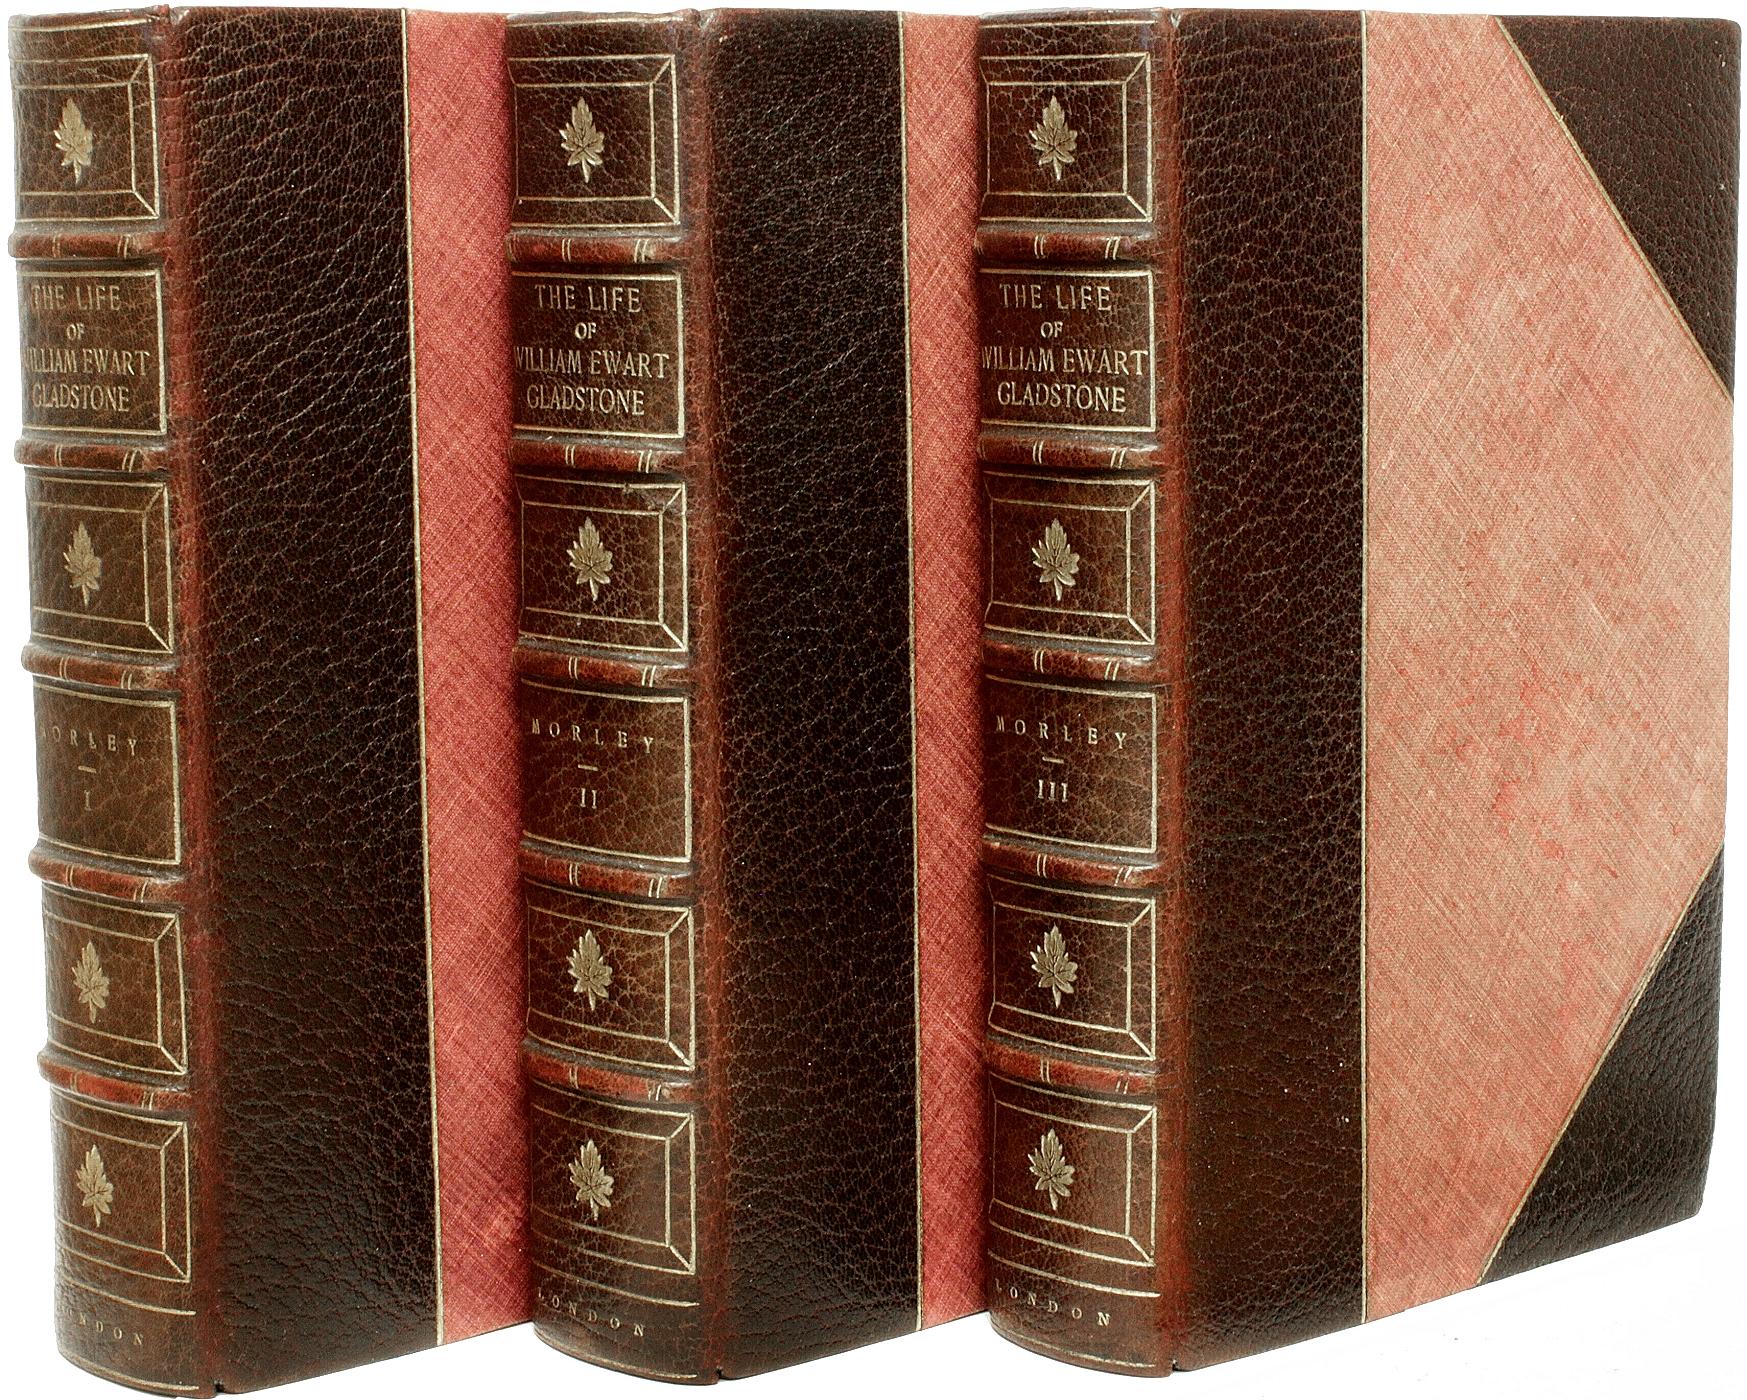 AUTHOR: MORLEY, John. 

TITLE: The Life Of William Ewart Gladstone.

PUBLISHER: NY: Macmillan Company, 1903.

DESCRIPTION: 3 vols., 9